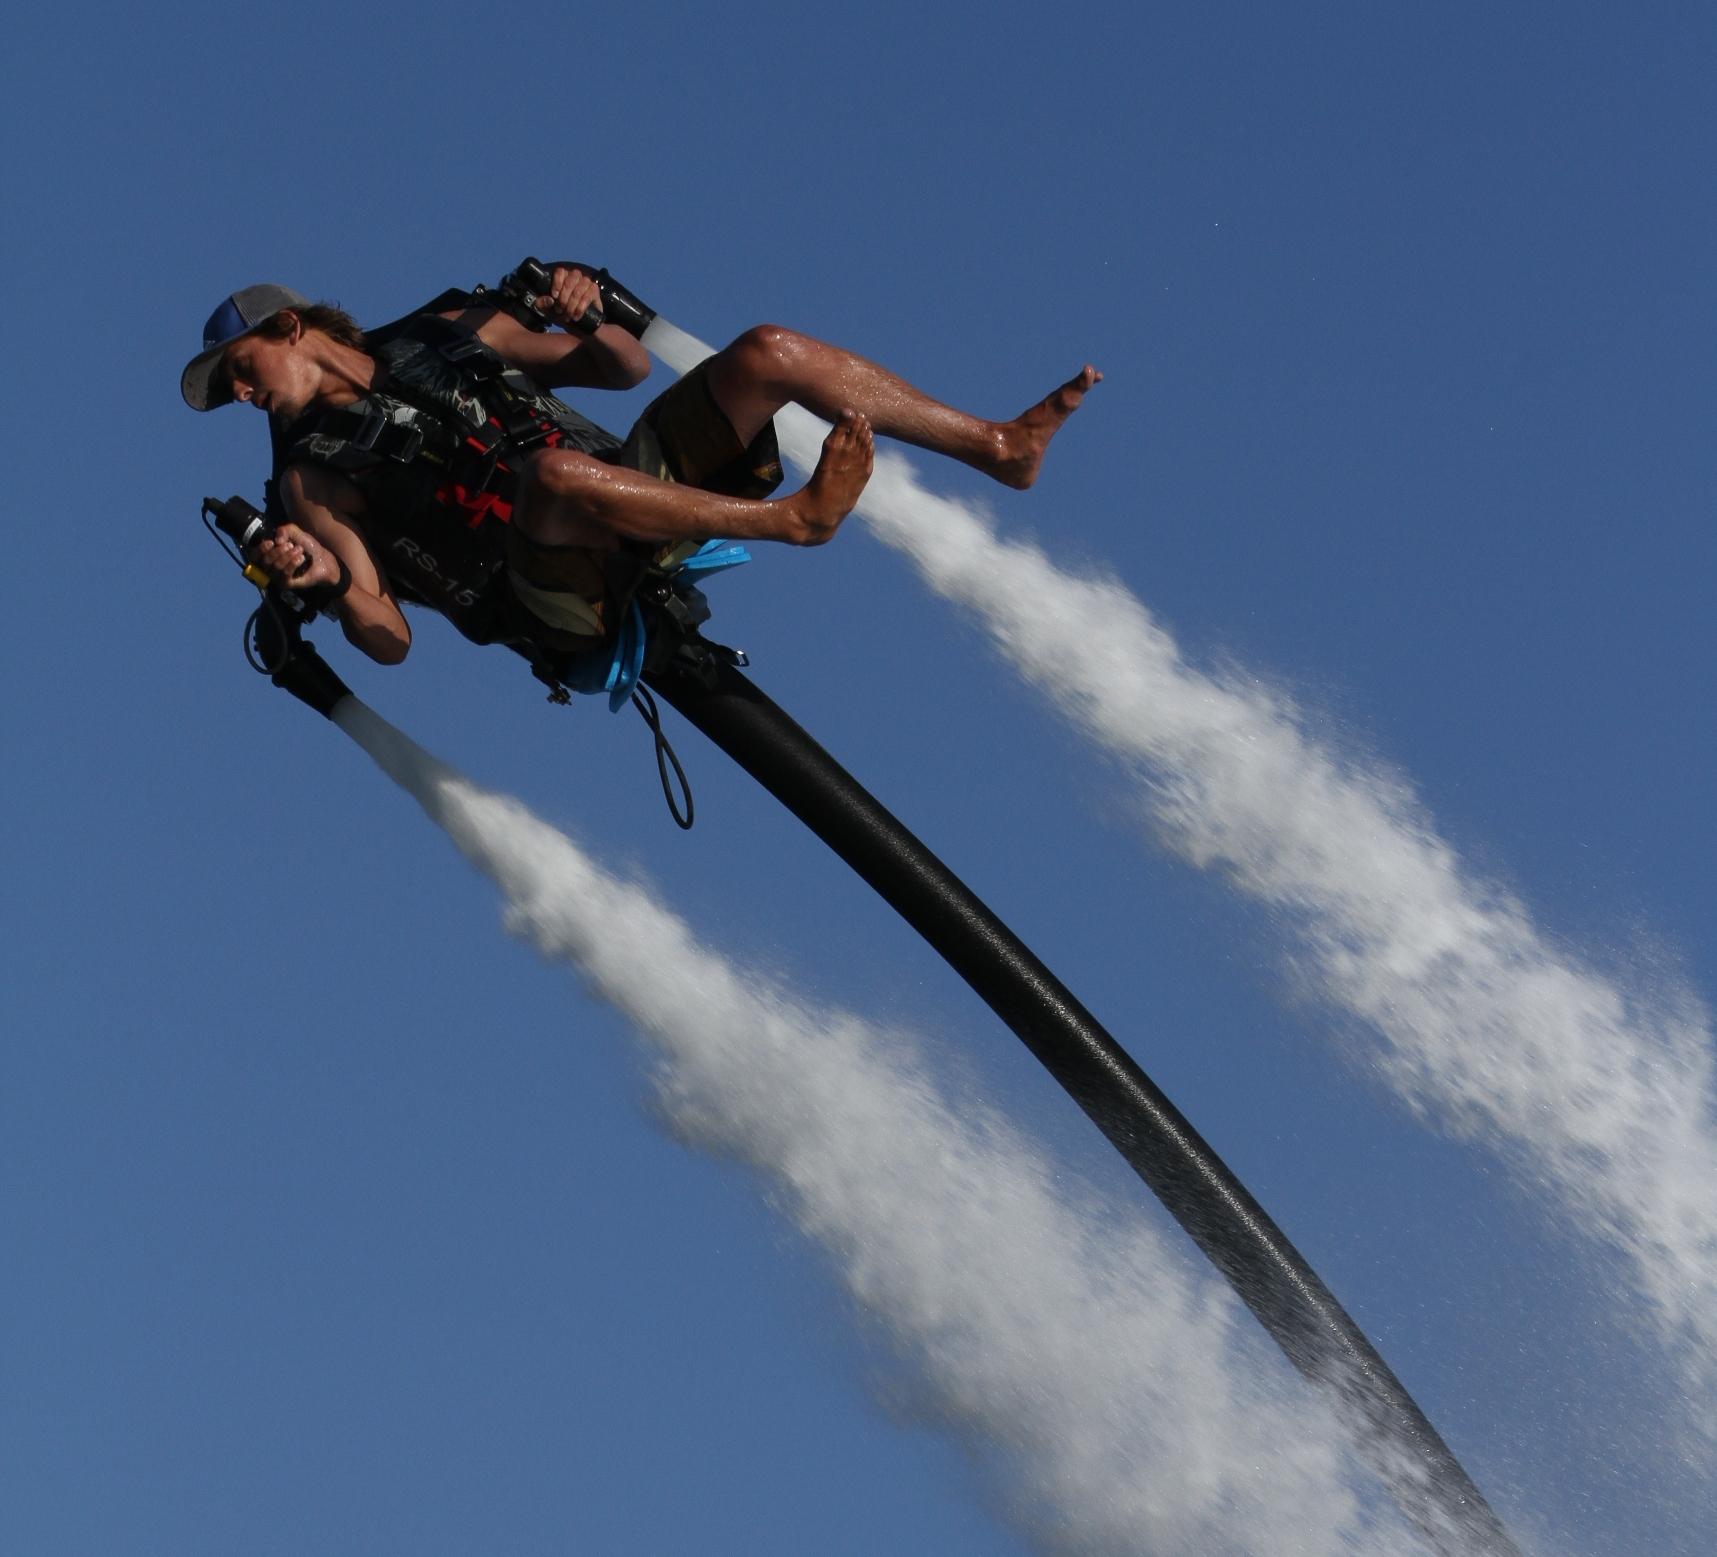 File:Water jet pack.jpg - Wikimedia Commons